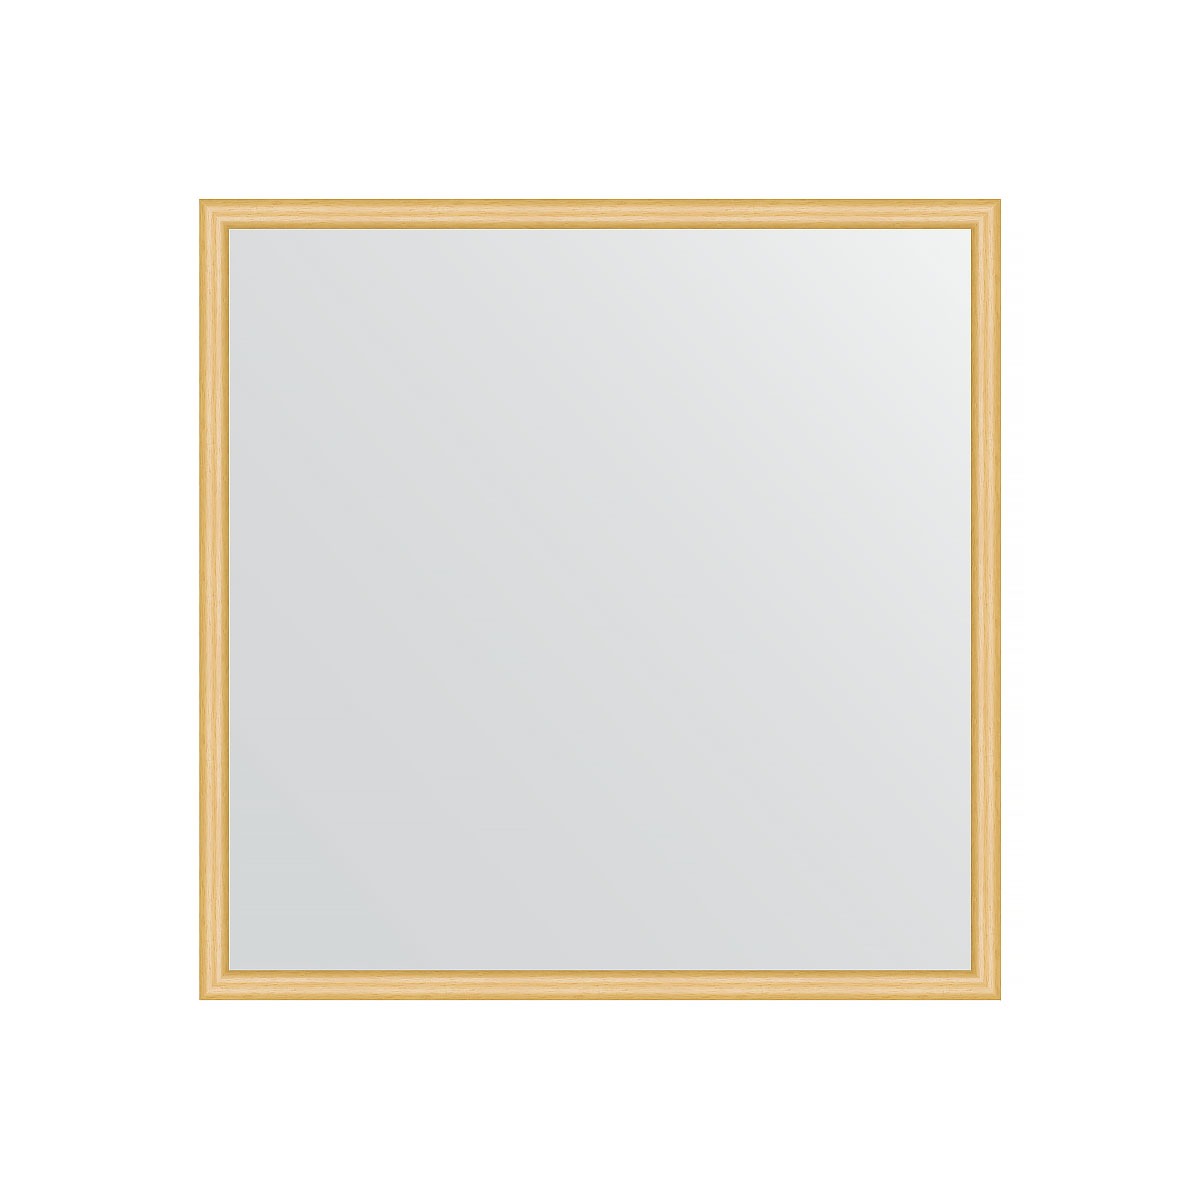 Зеркало в багетной раме Evoform сосна 22 мм 68х68 см зеркало в багетной раме evoform сосна 22 мм 68х68 см